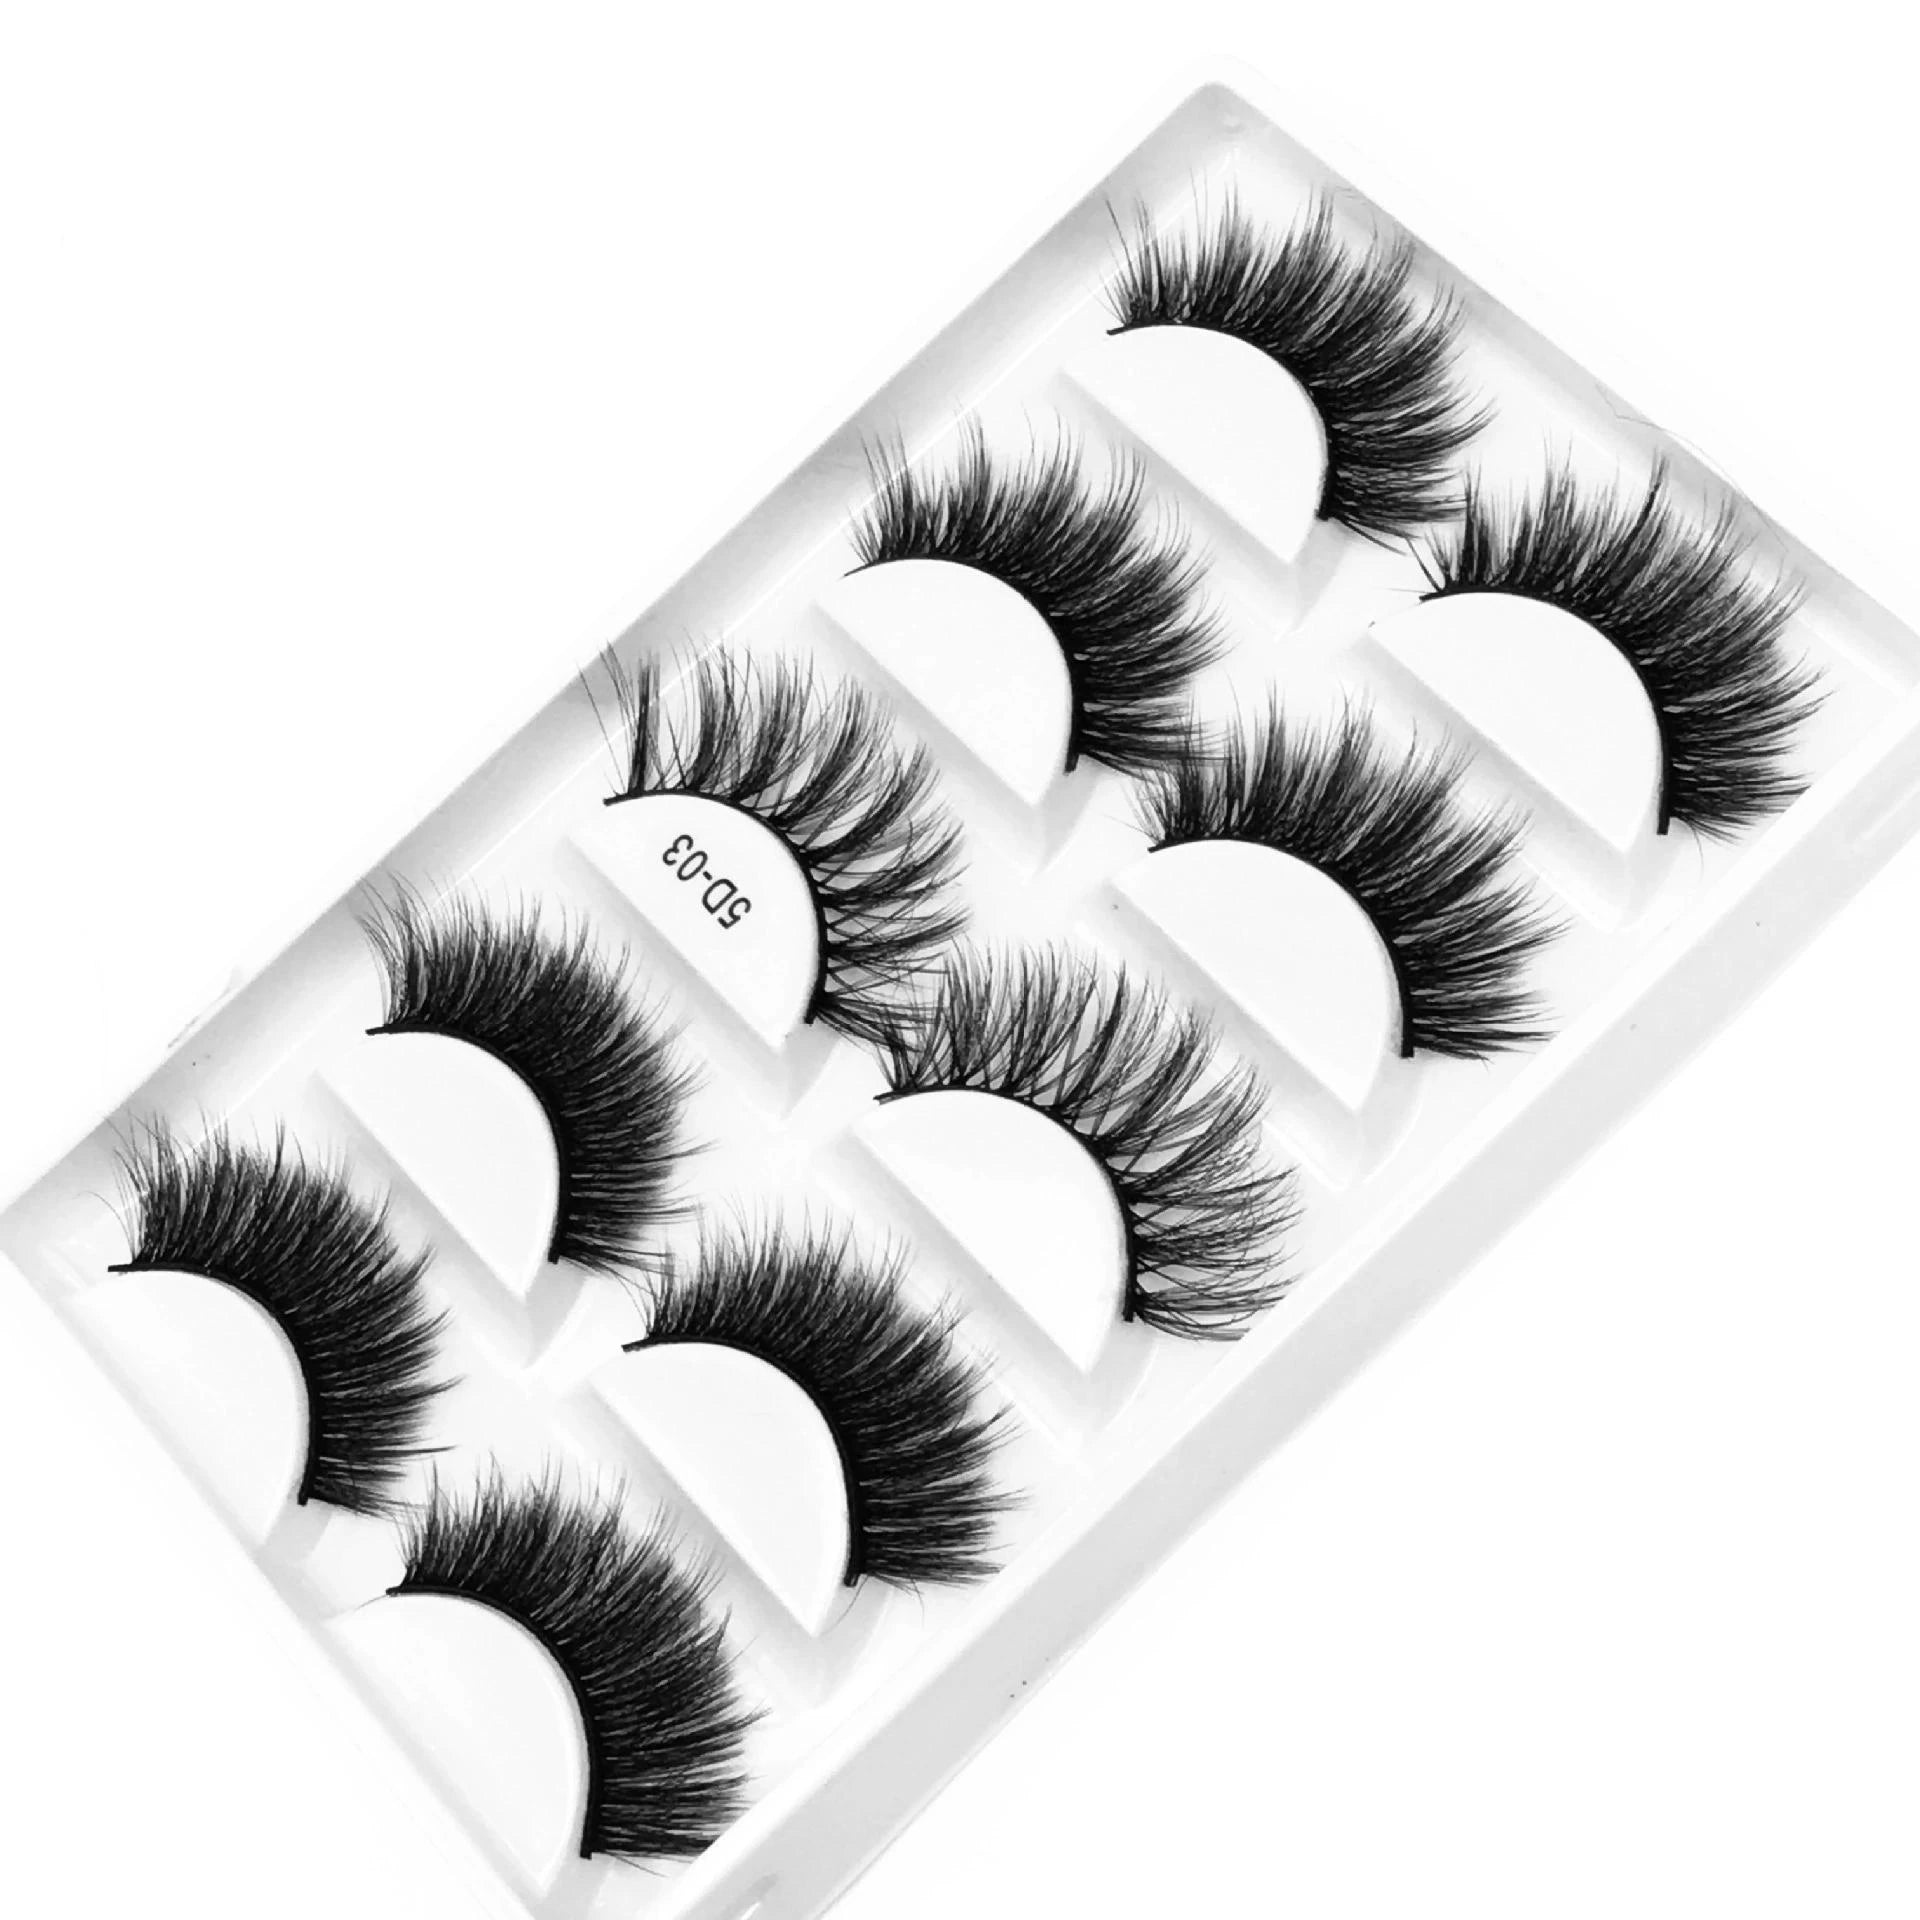 5 Pair 100% Real Mink Eyelashes Faux Fake Eyelashes 3D Natural False Eyelashes Soft Eyelash Extension Makeup Cilios H13 E08 G806